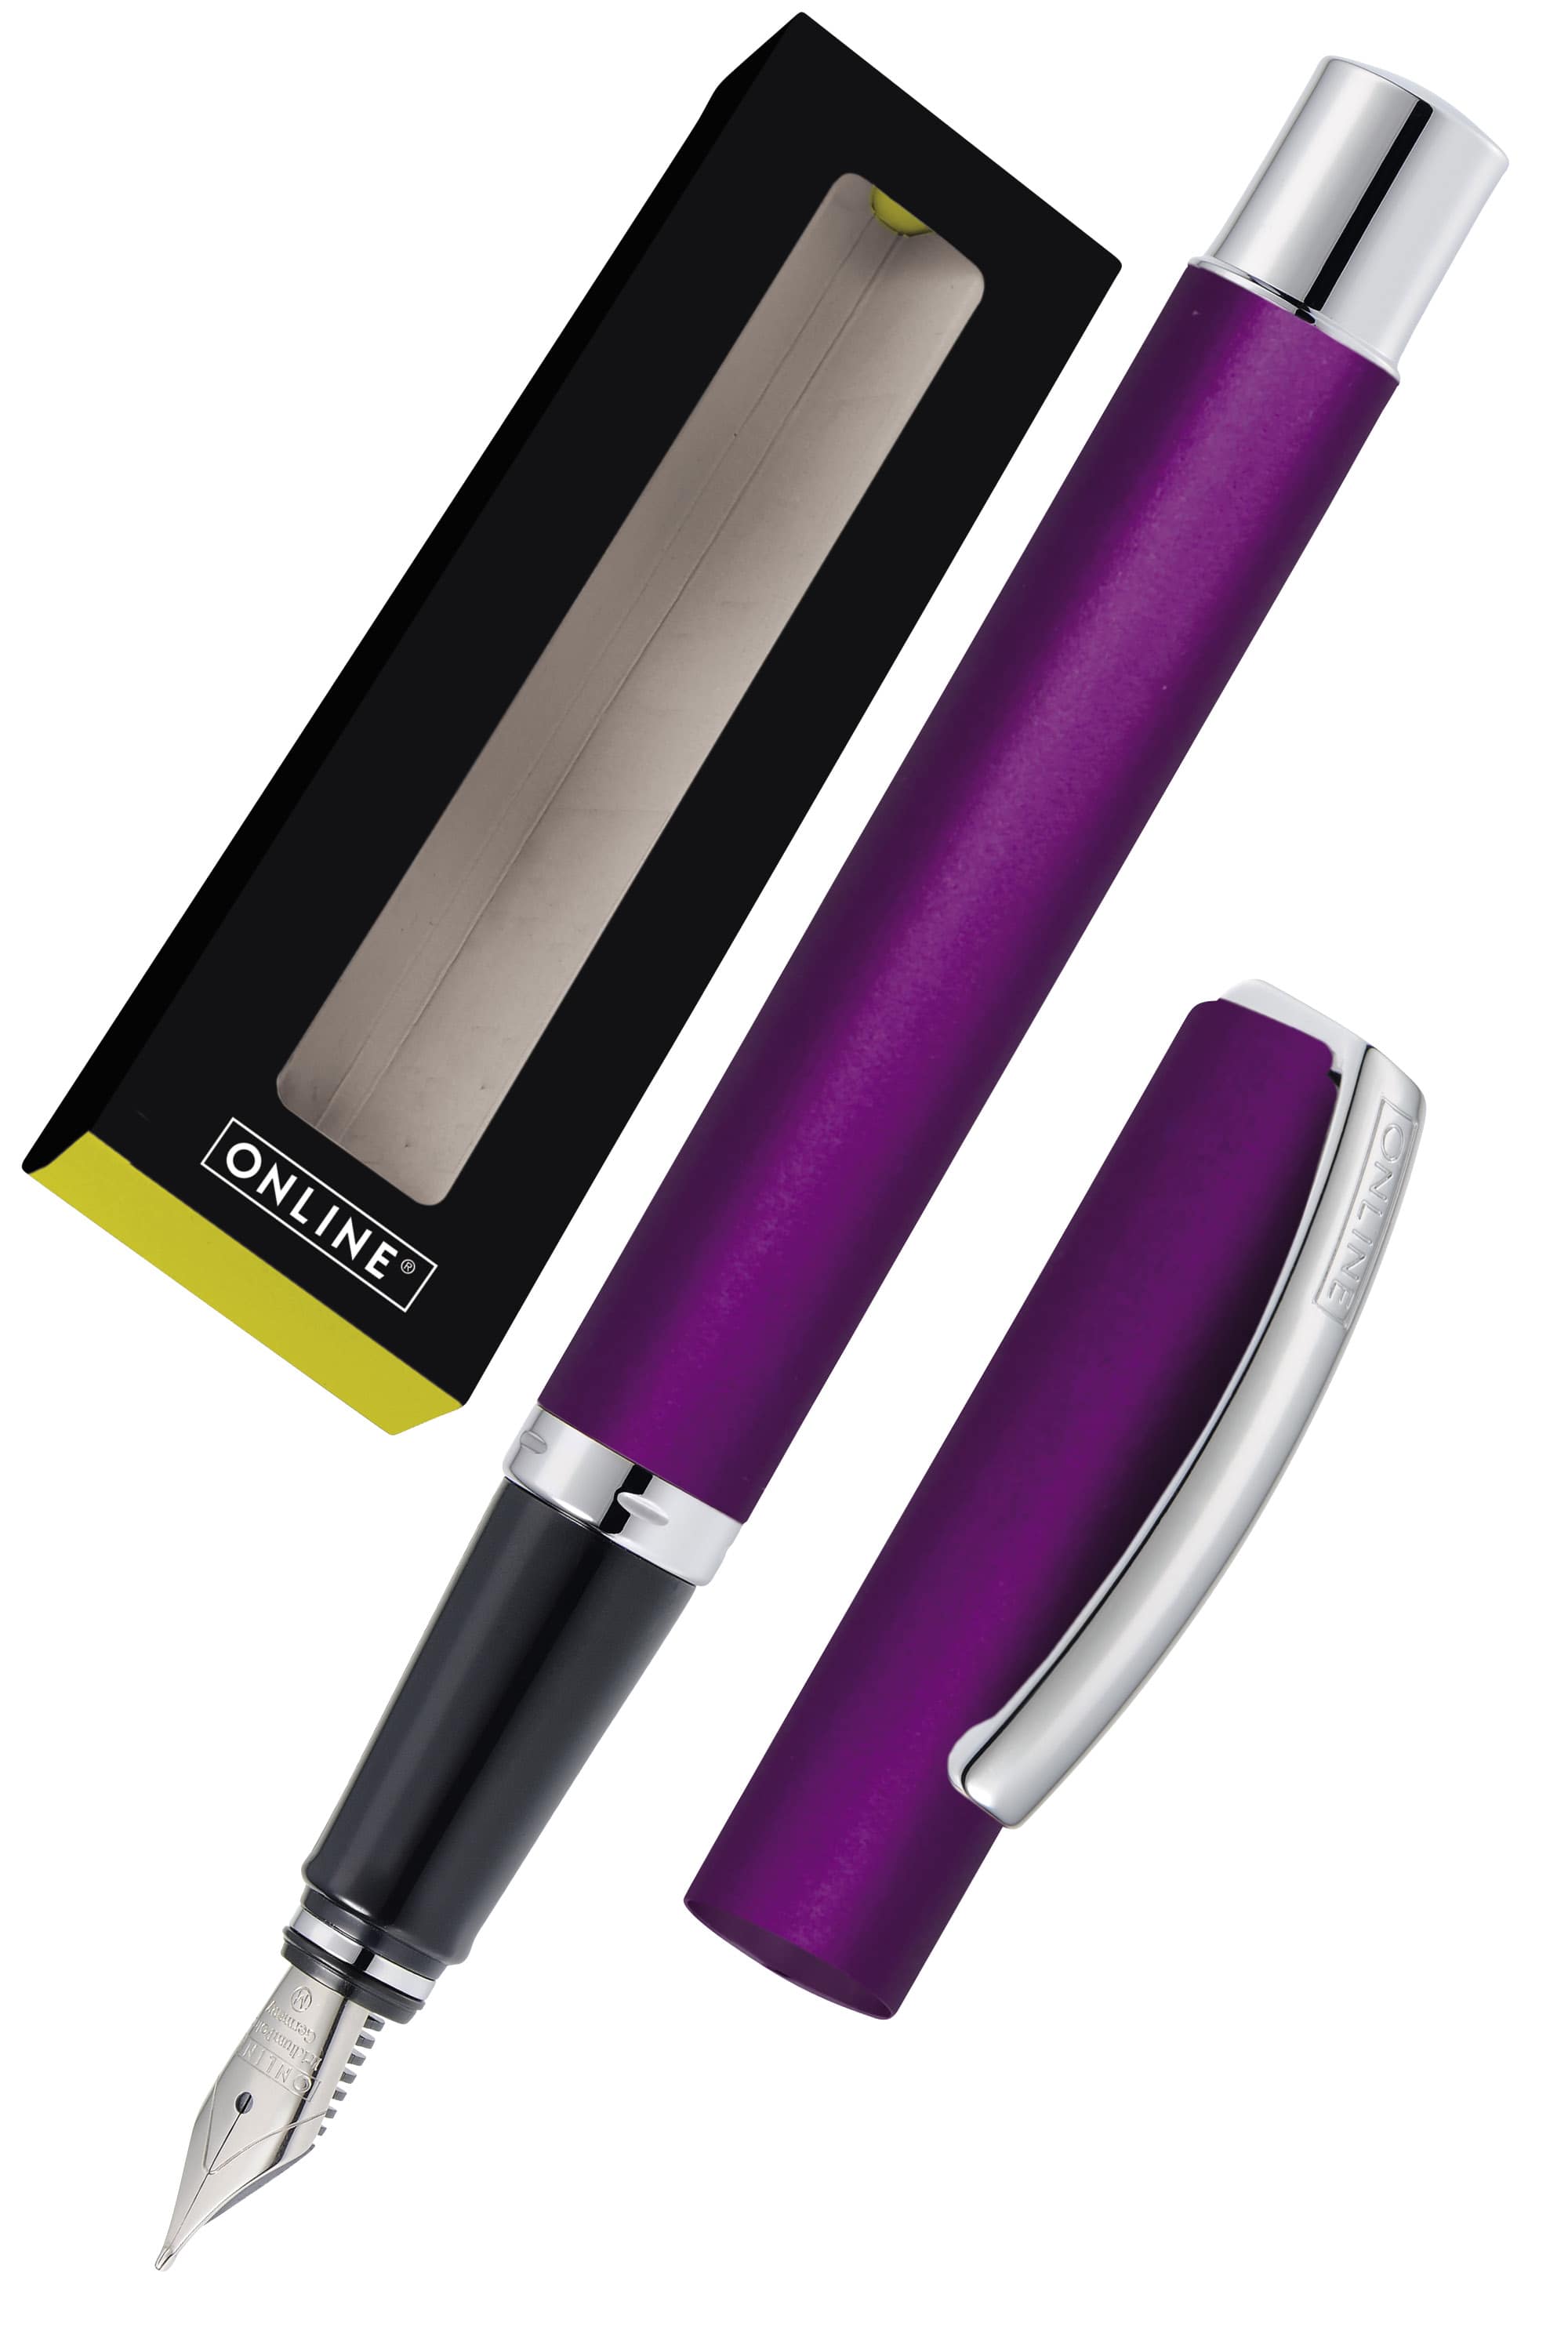 Fountain Pen Vision Satin Wild Purple Feder M